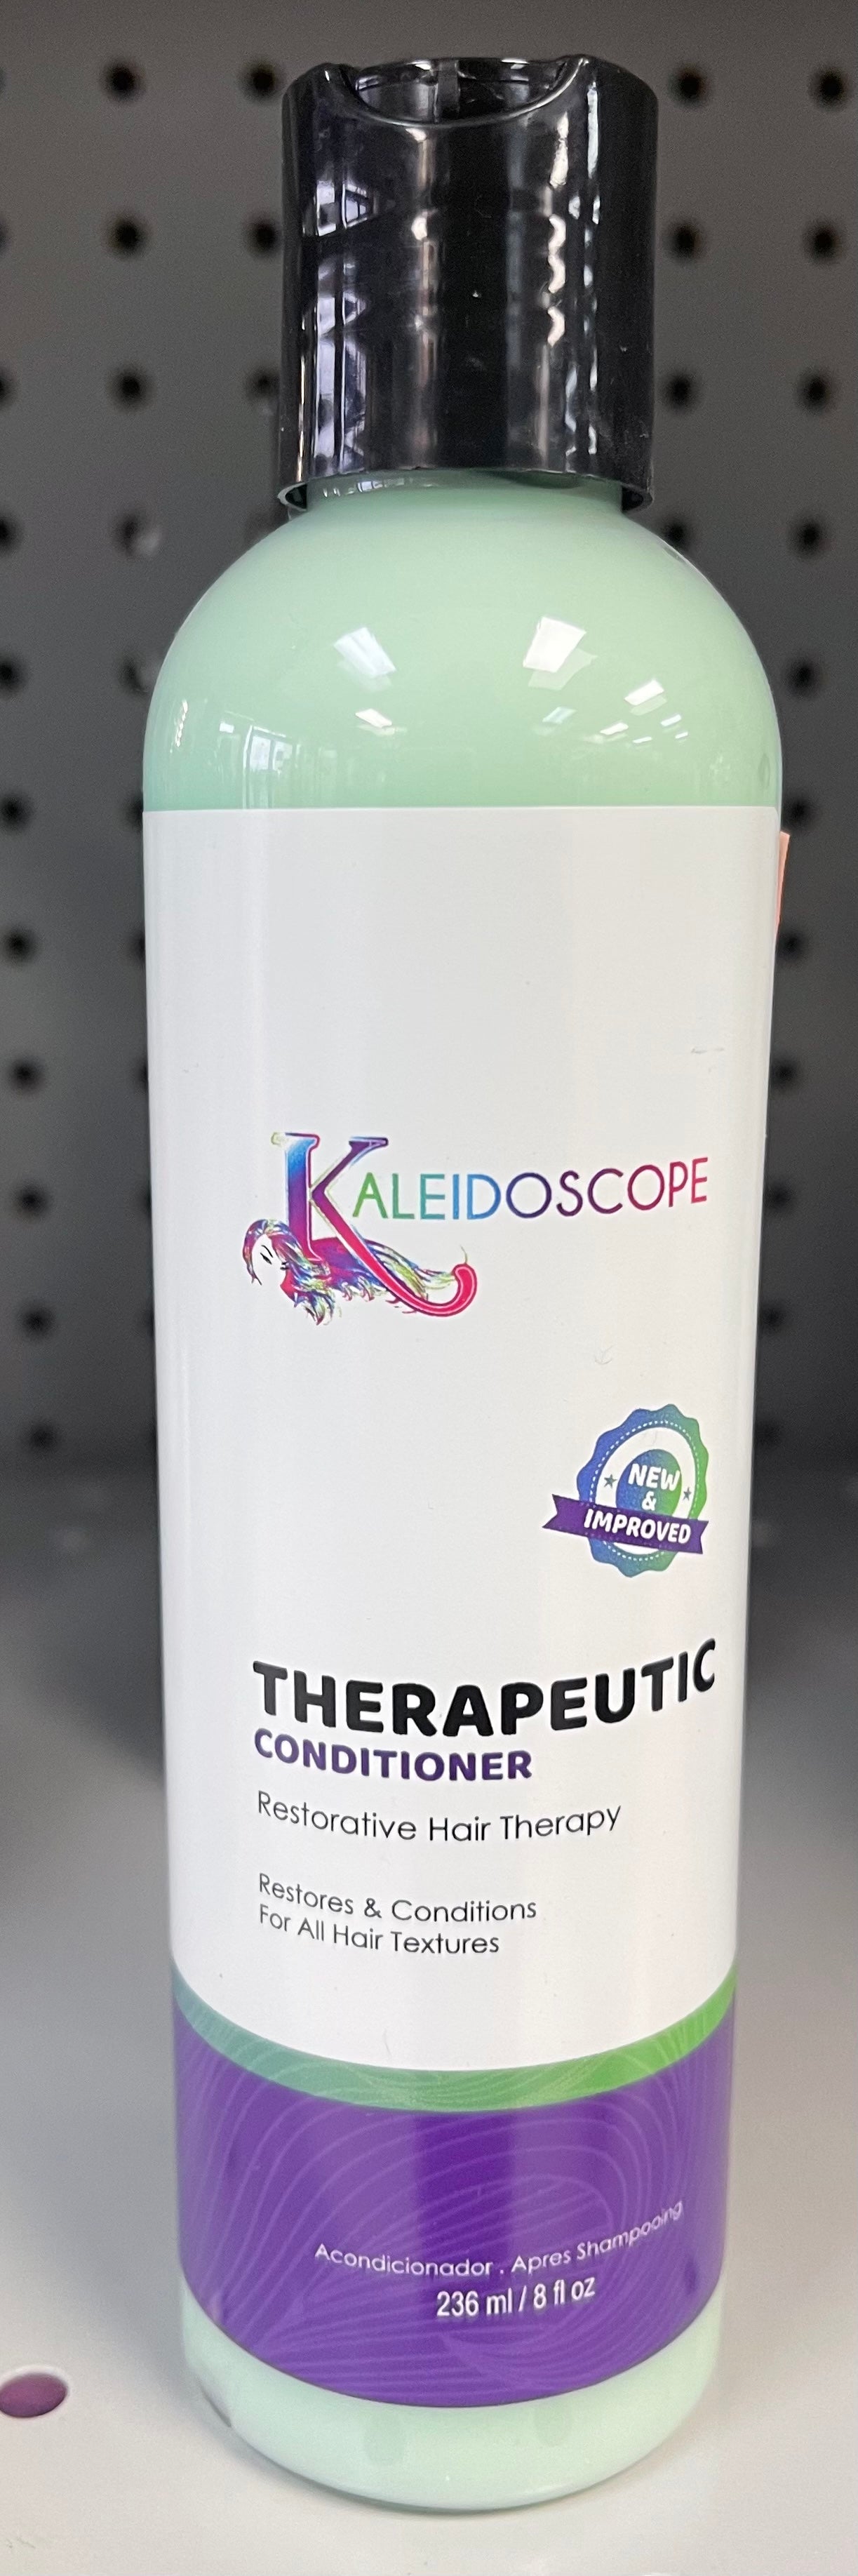 Kaleidoscope Therapeutic Conditioner